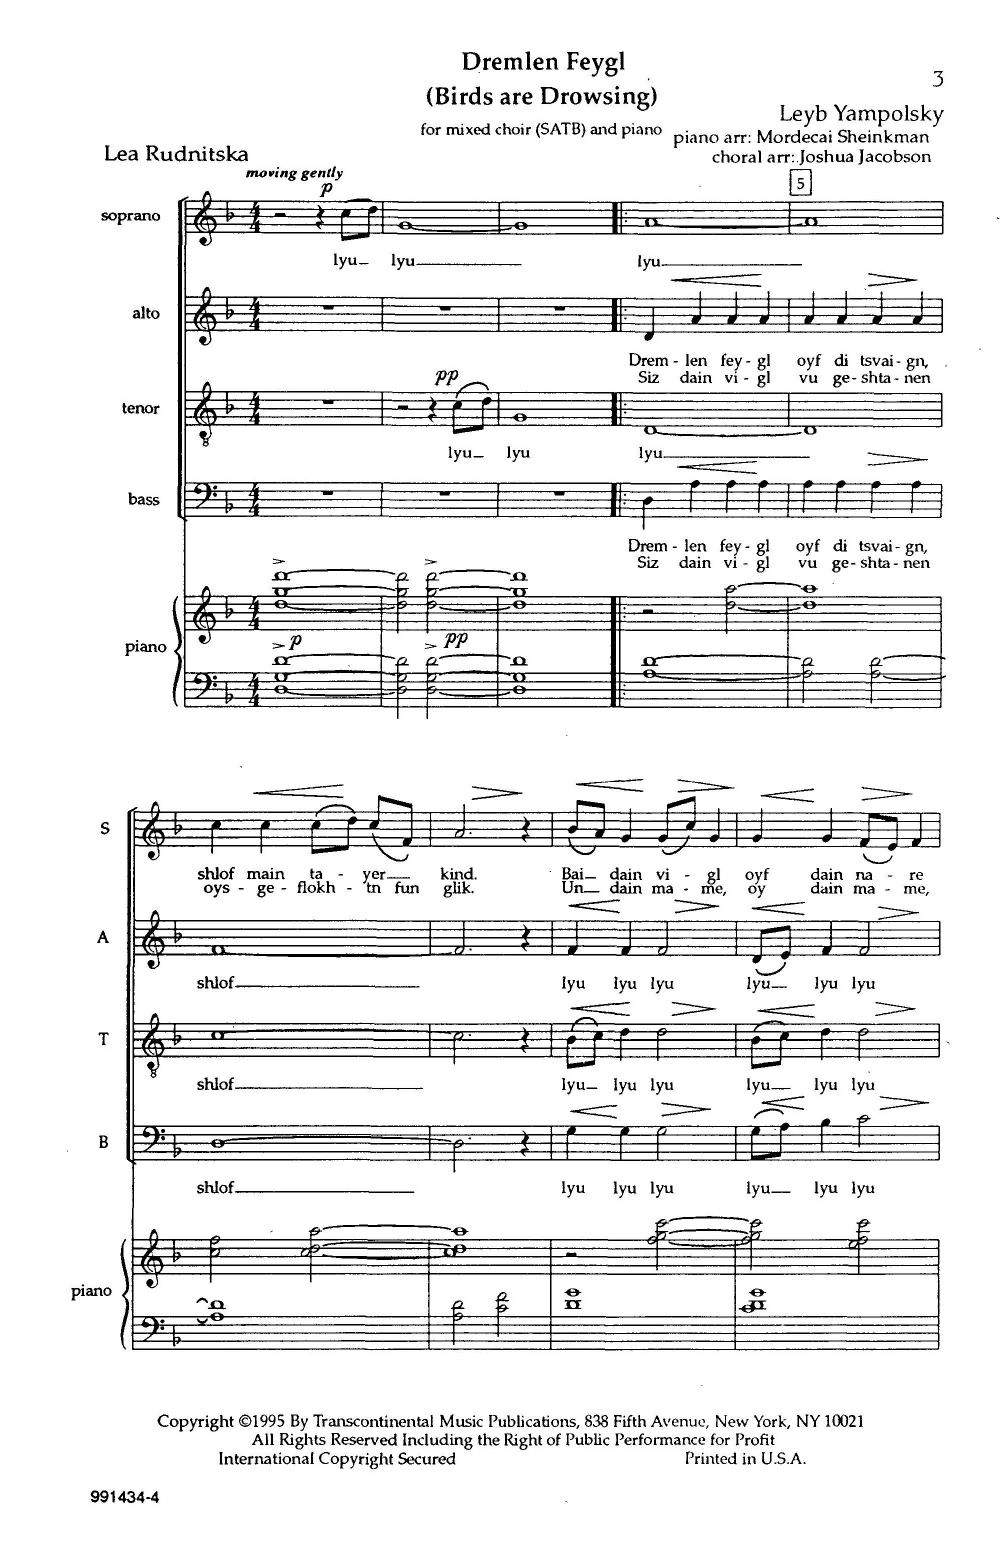 Joshua Jacobson Dremlen Feygl (Birds Are Drowsing) Sheet Music Notes & Chords for SATB Choir - Download or Print PDF